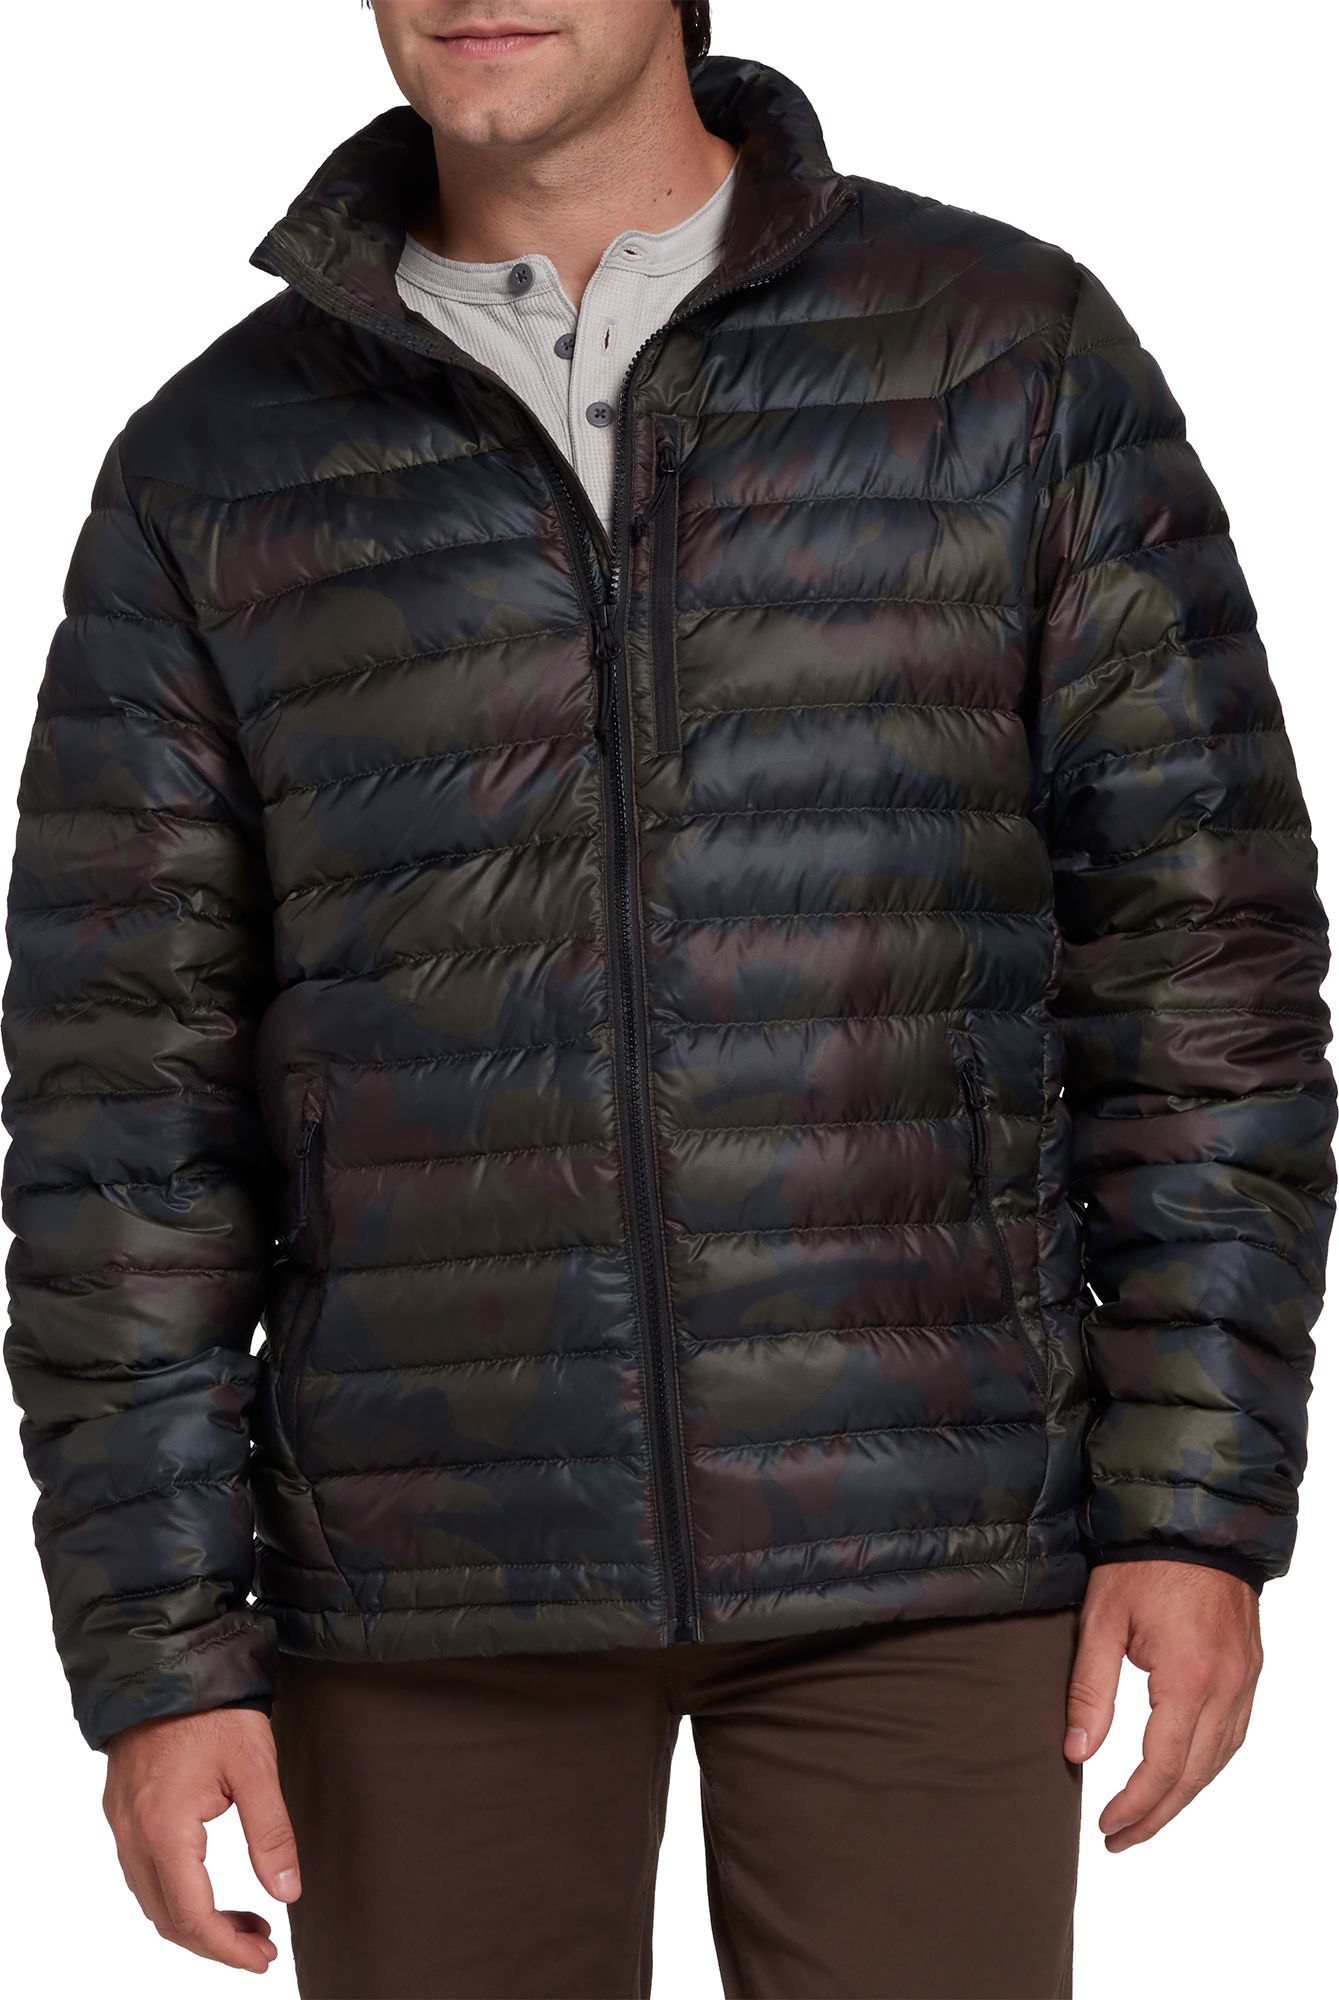 alpine camo bomber jacket